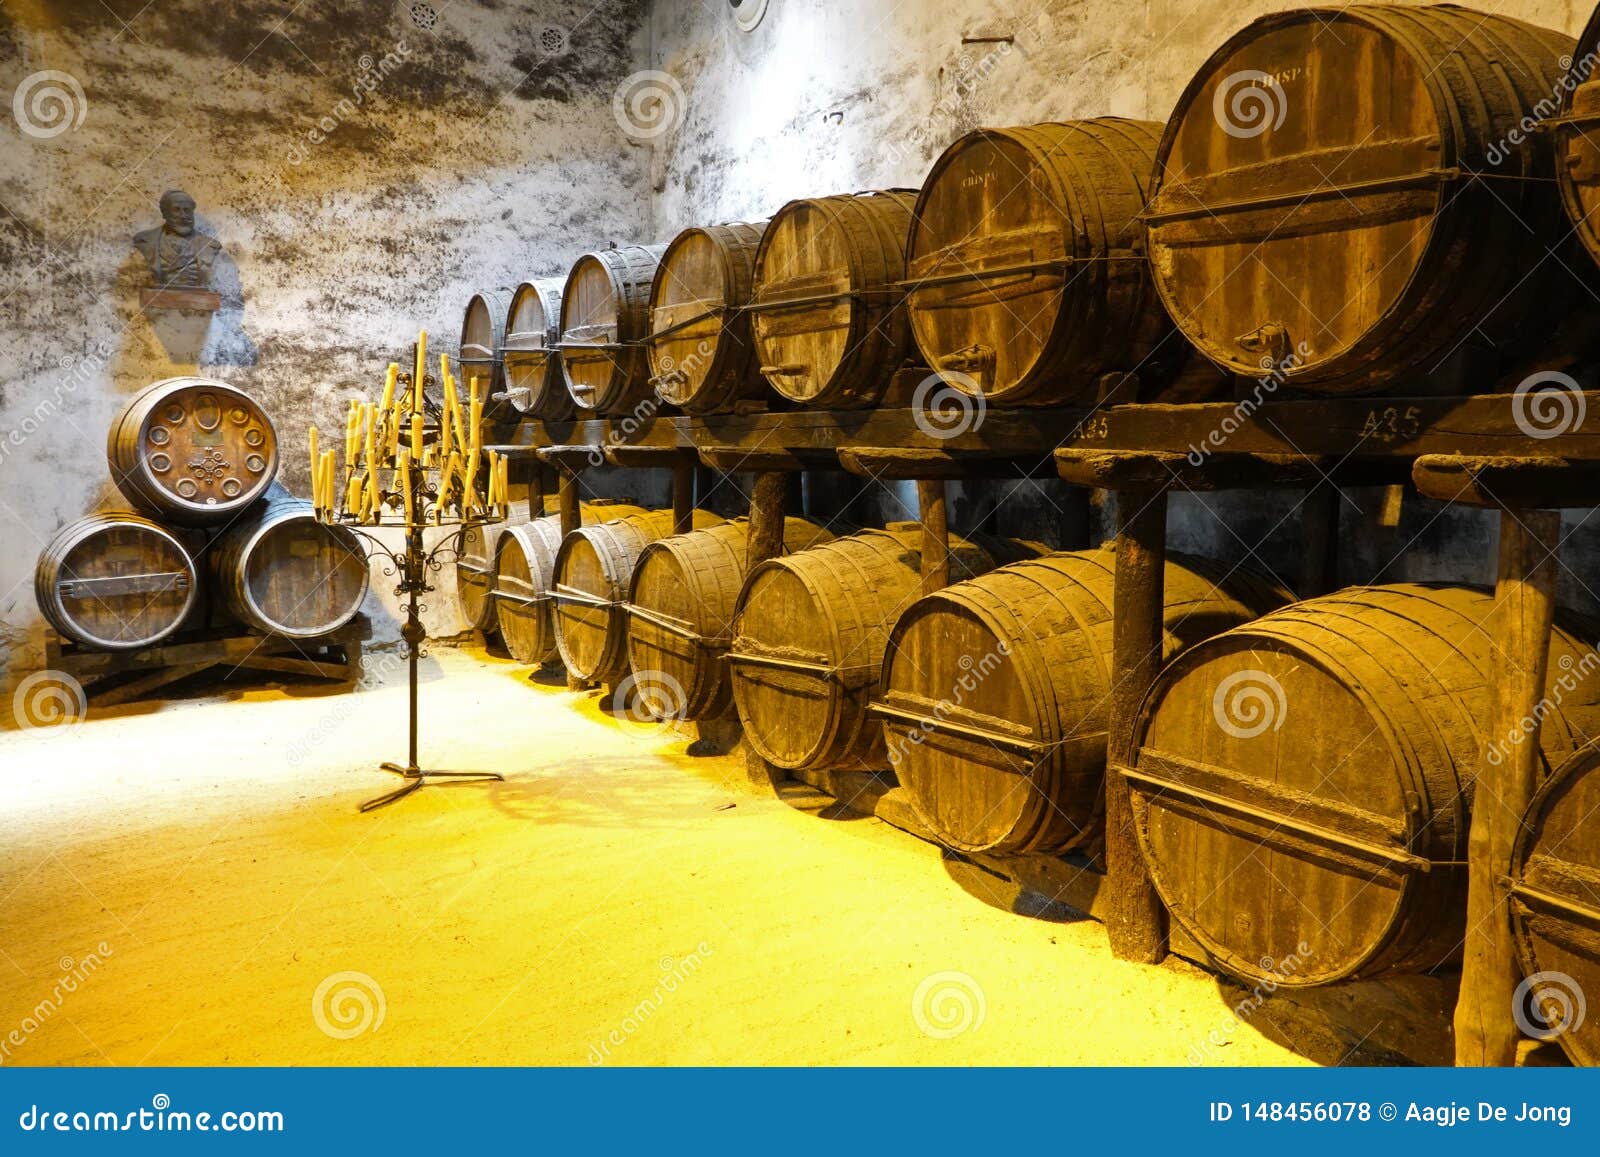 old sherry barrels in jerez de la frontera in andalusia, spain